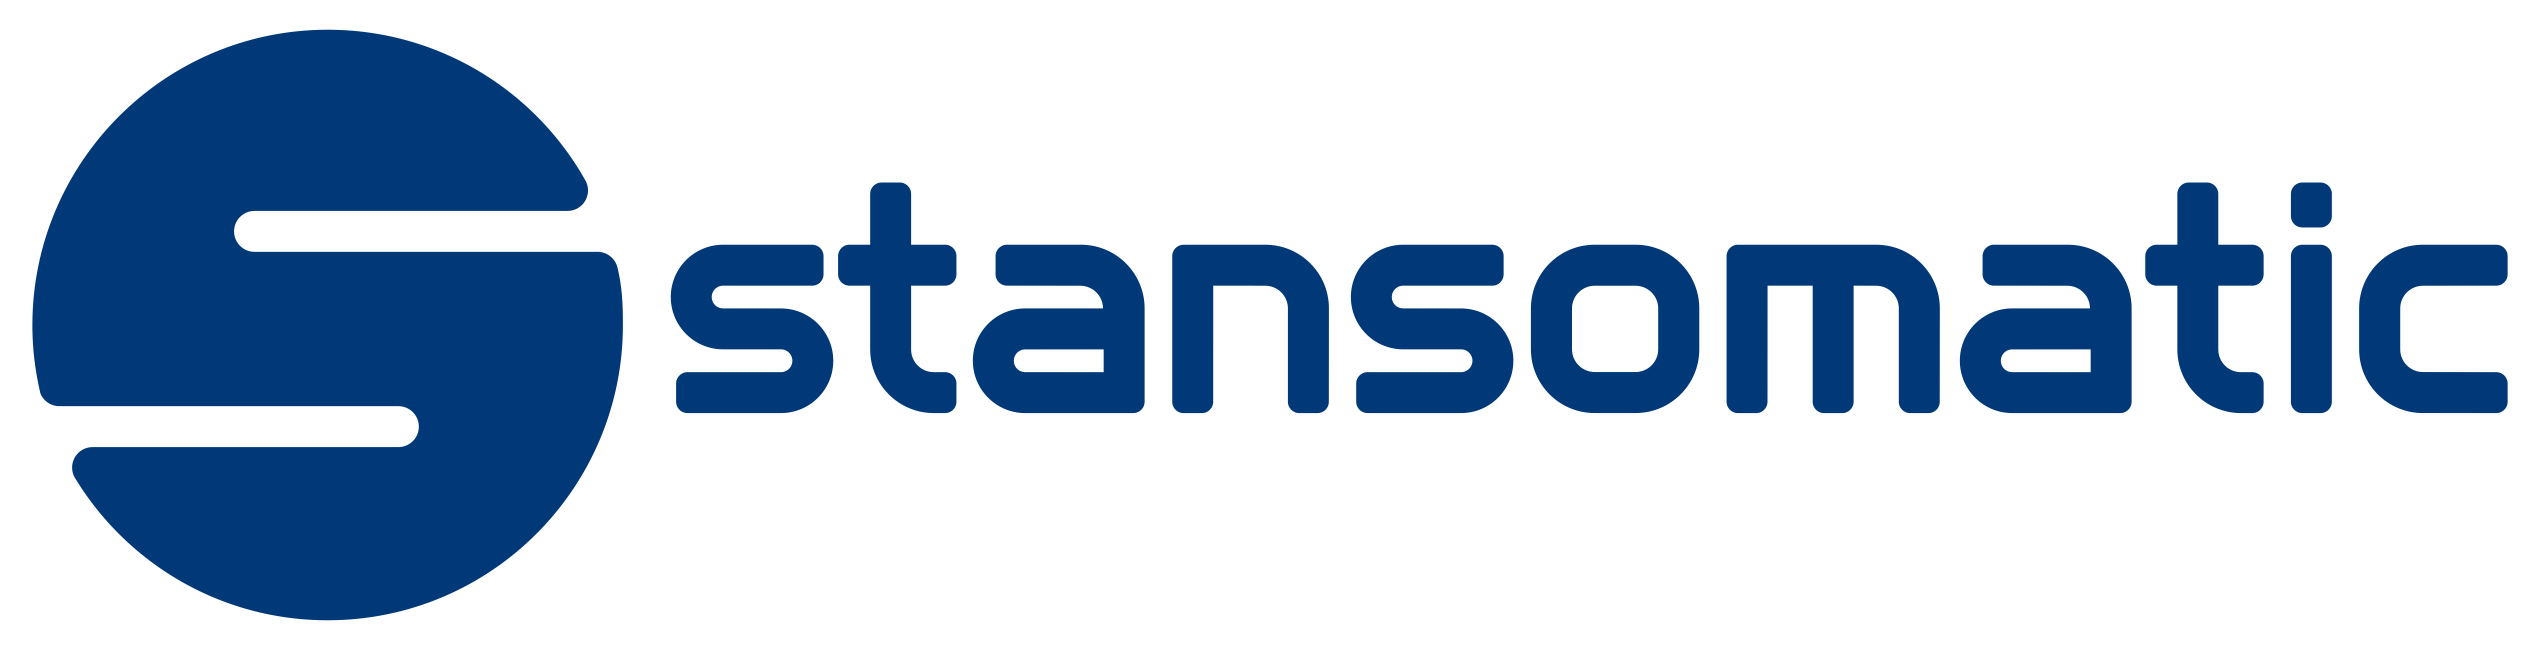 Stansomatic logo 2021 dark blue png